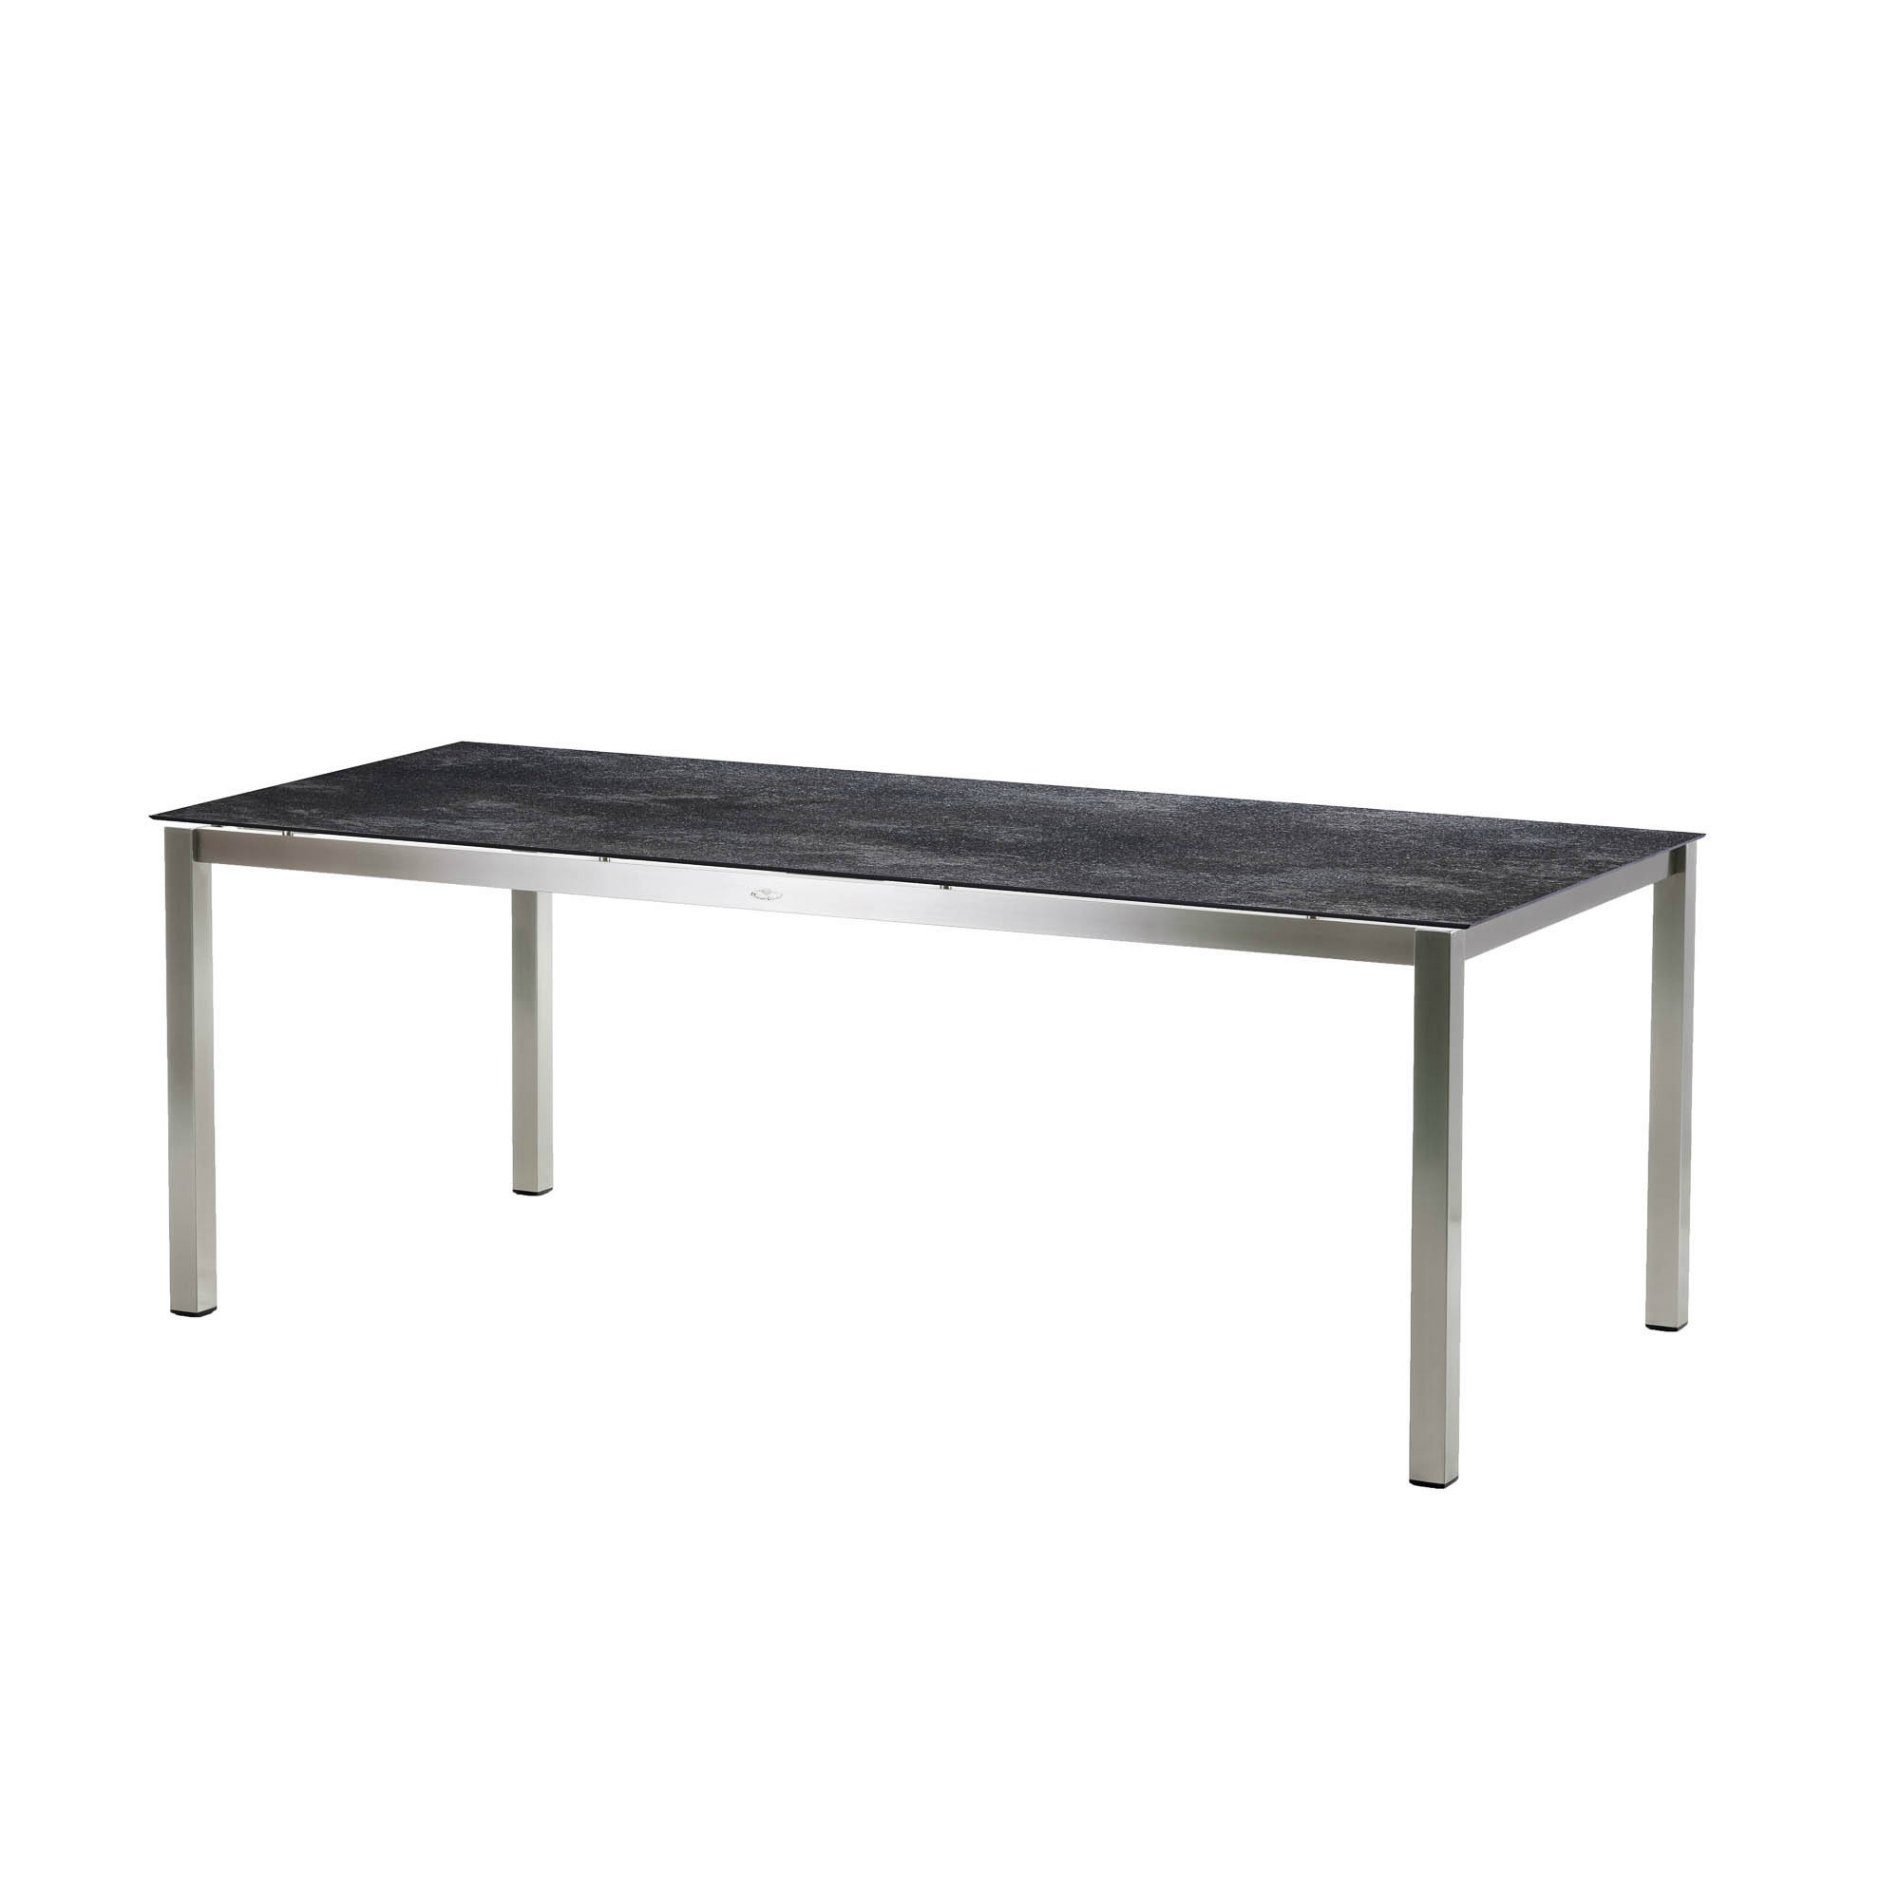 Diamond Garden Tisch "San Marino", Gestell Edelstahl, Platte DiGa Compact HPL Granit dunkel, 198x98 cm